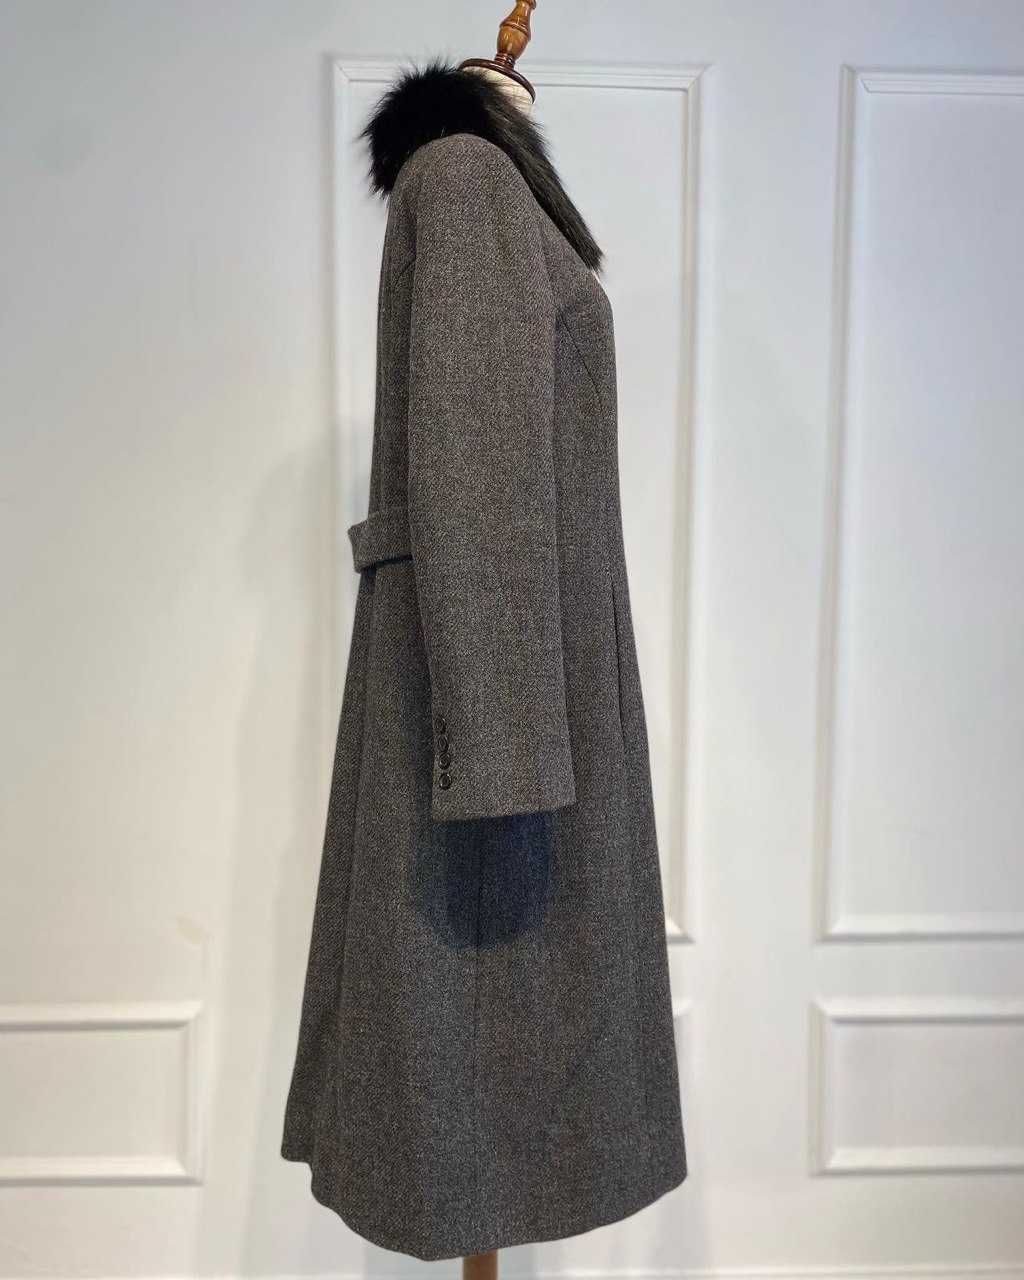 Пальто Луи Виттон Louis Vuitton, серое, размер EU 42 / RU 48